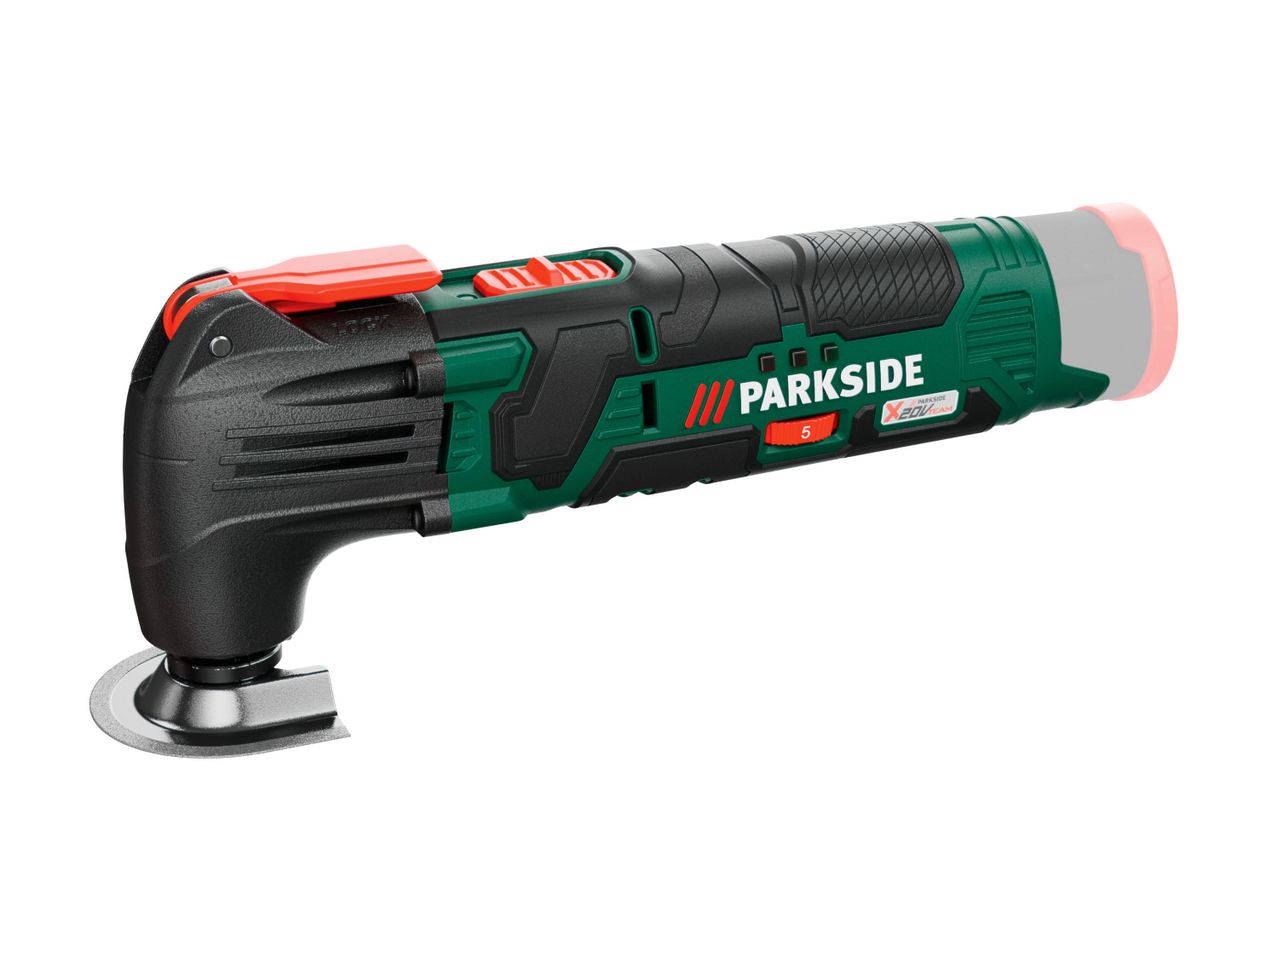 Ver empliada: Parkside® Ferramenta Multiúsos 12 V sem Bateria - Imagem 1